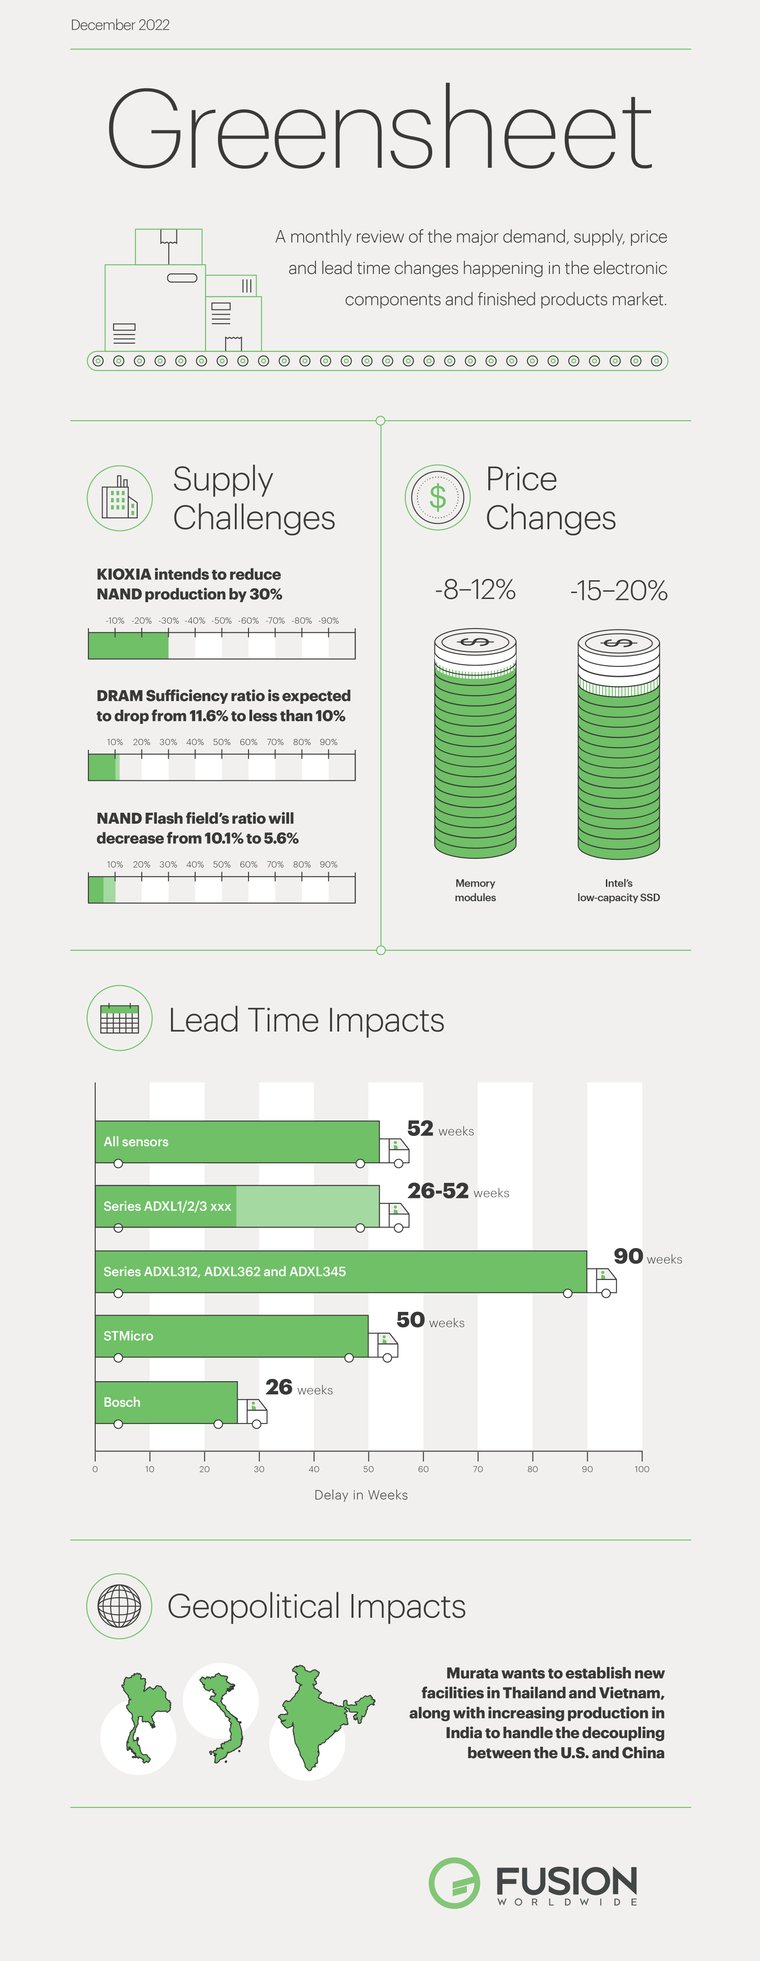 greensheet infographic-dec 2022-v2-01